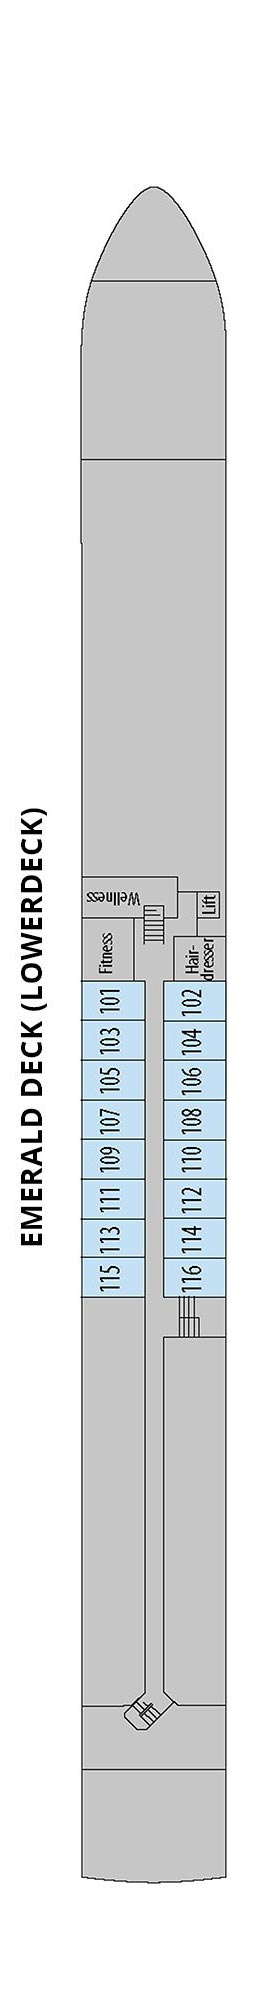 Lower Deck Deck Plan